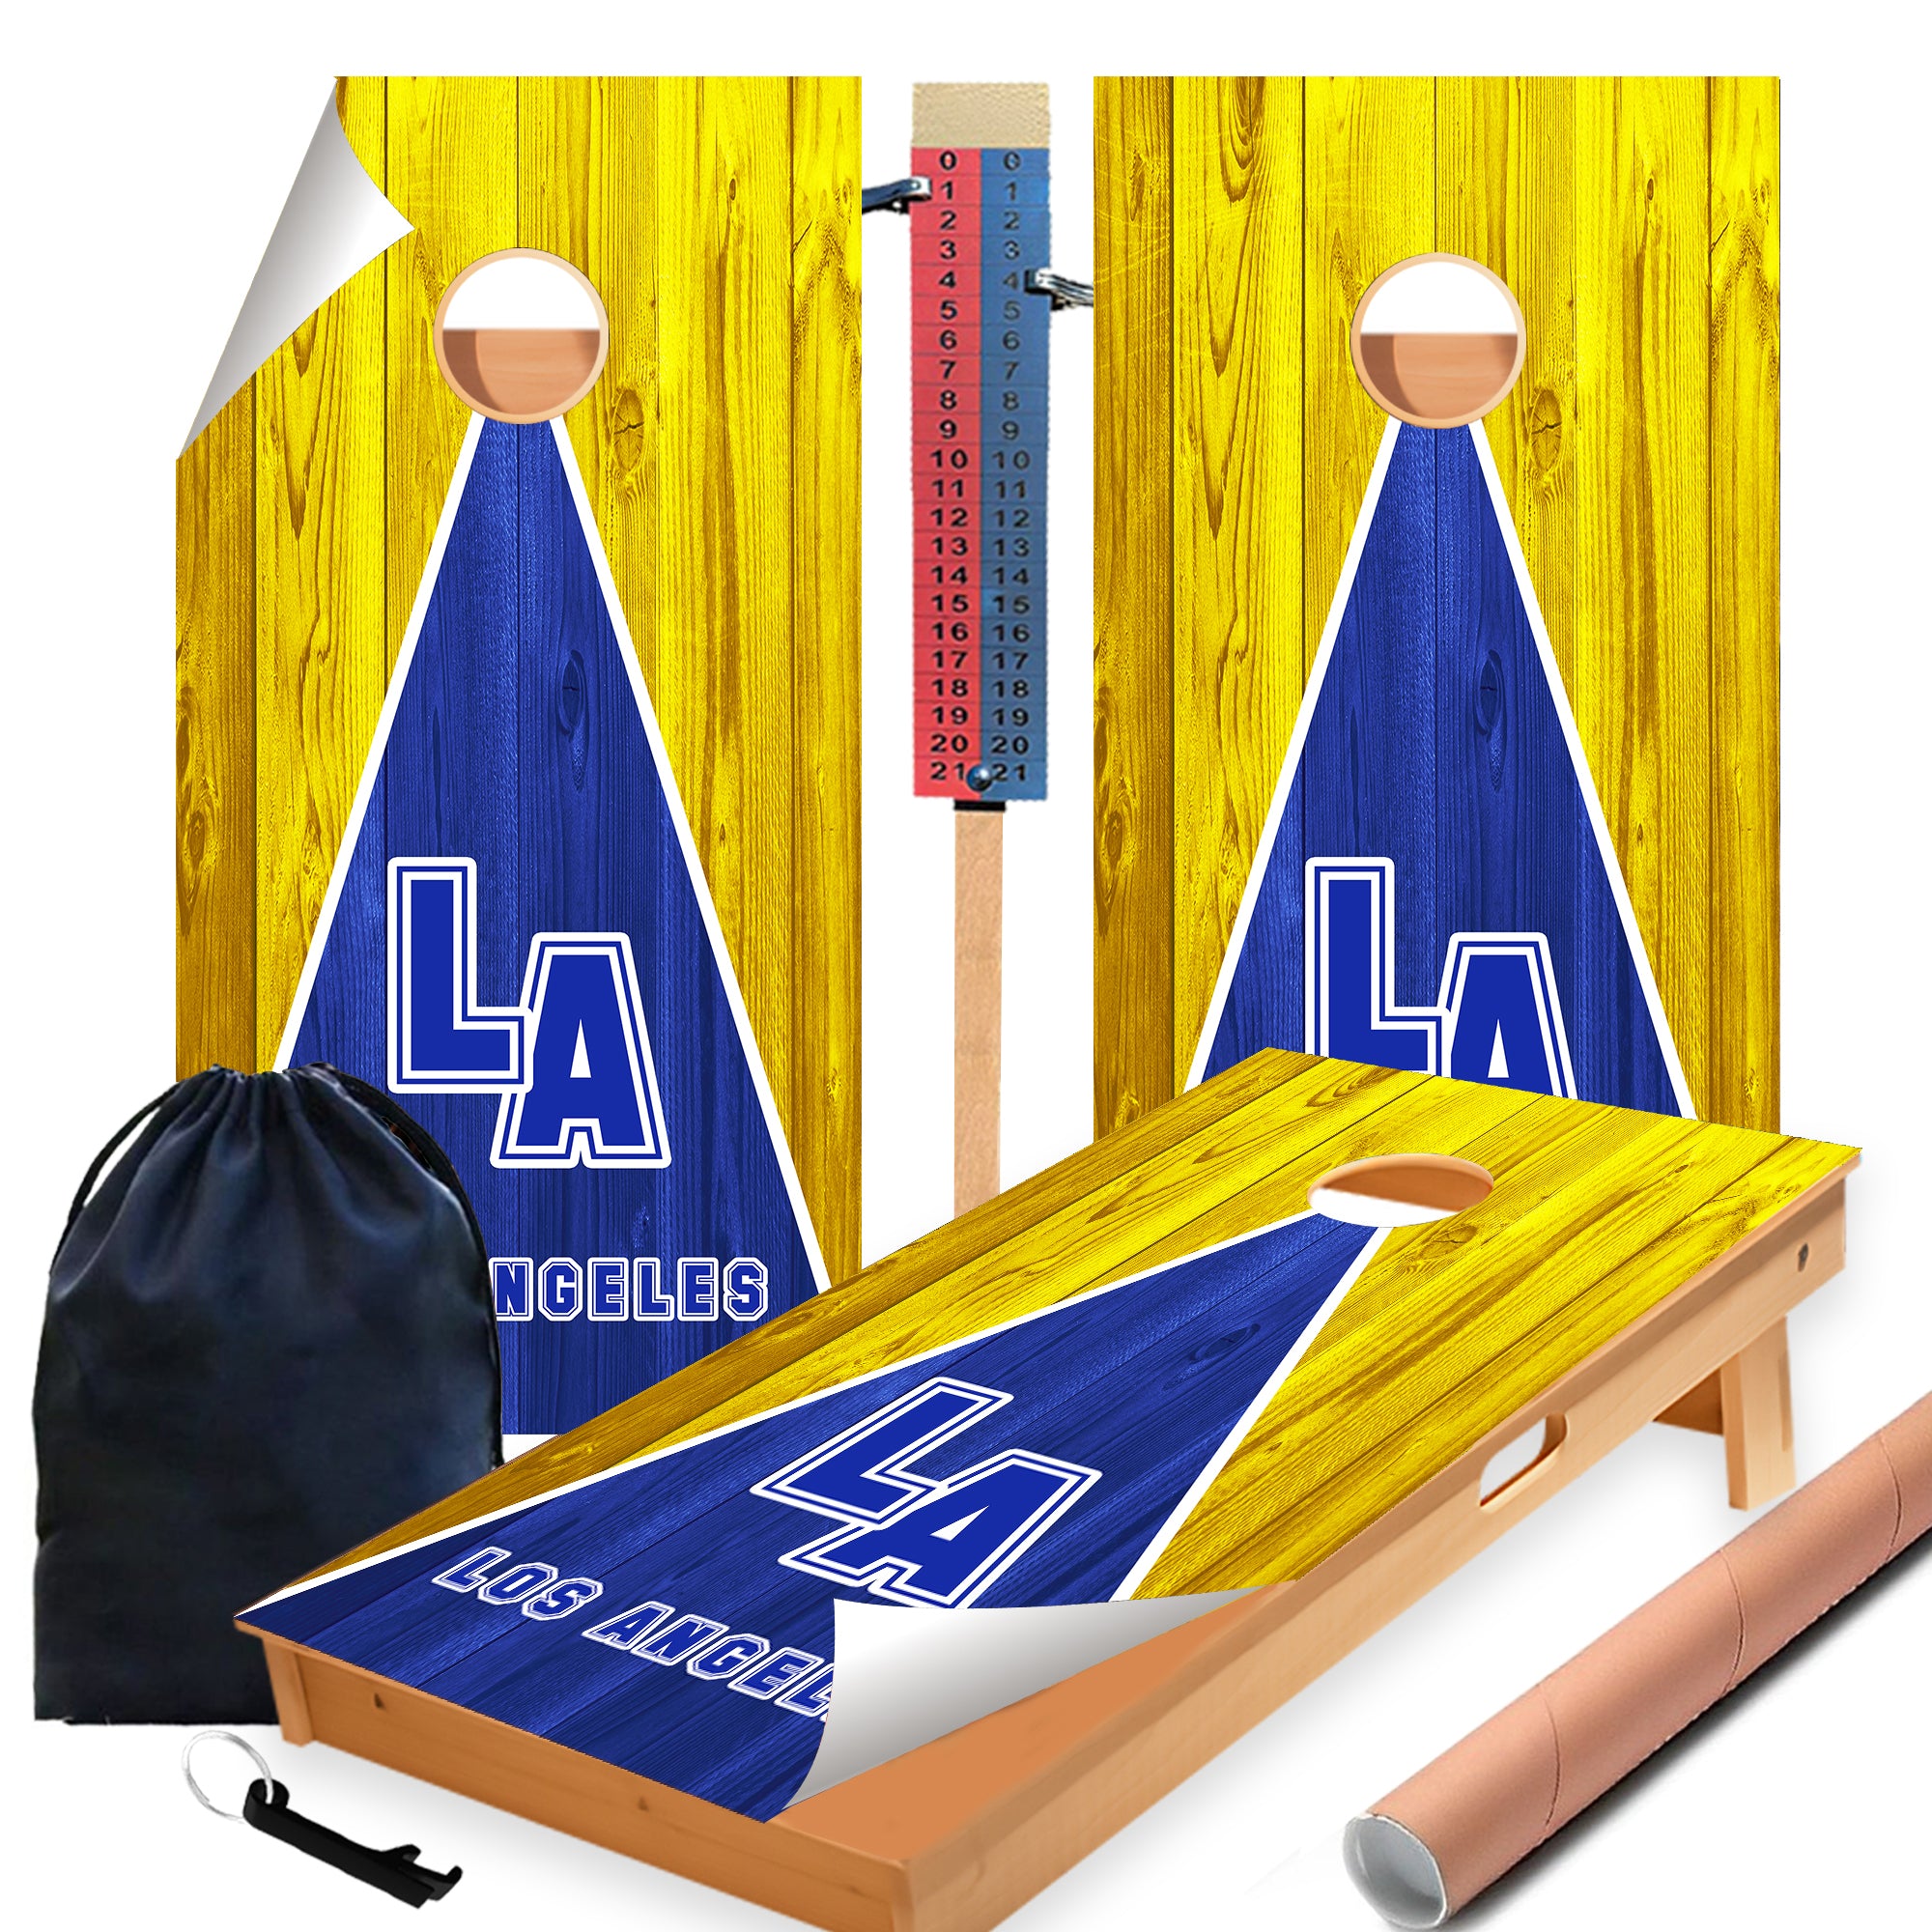 Los Angeles Football Cornhole Boards Wraps (Set of 2)